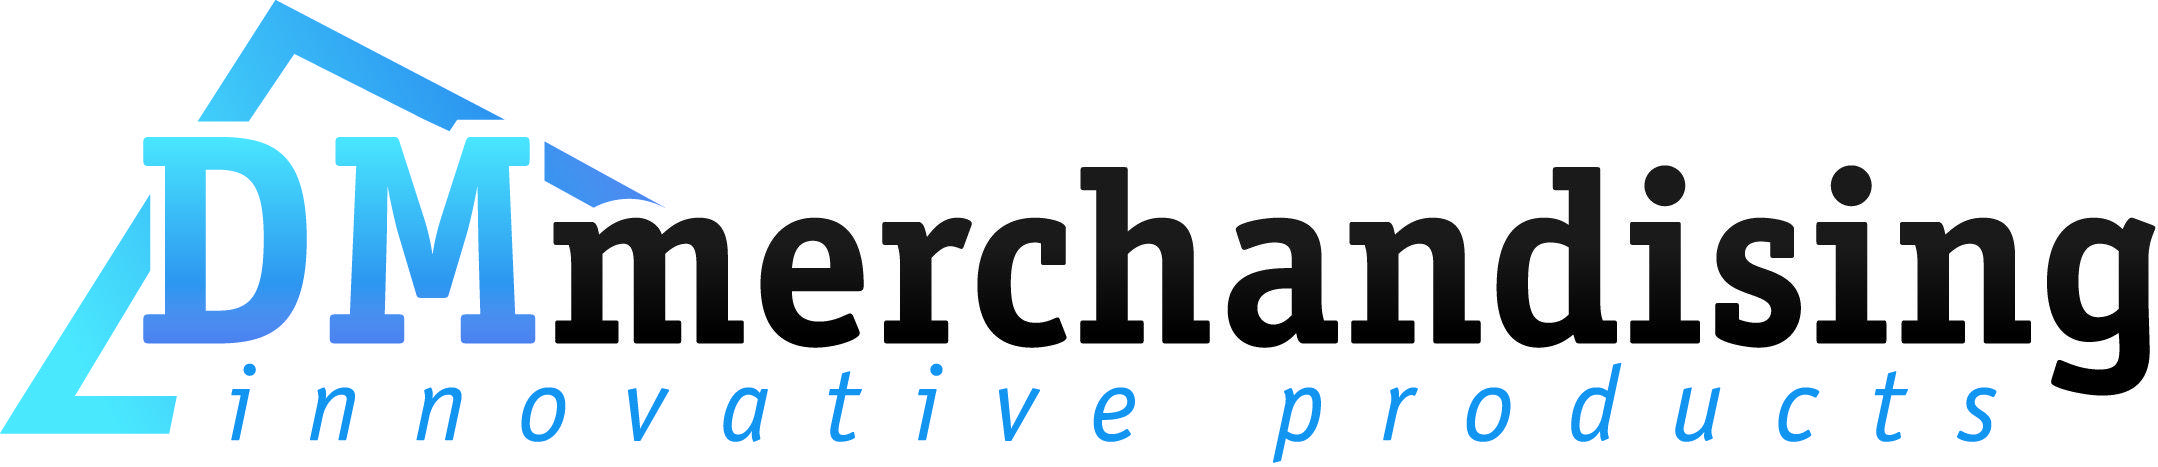 Merchandising Logo - Logo: DM Merchandising - Southeast Marketing